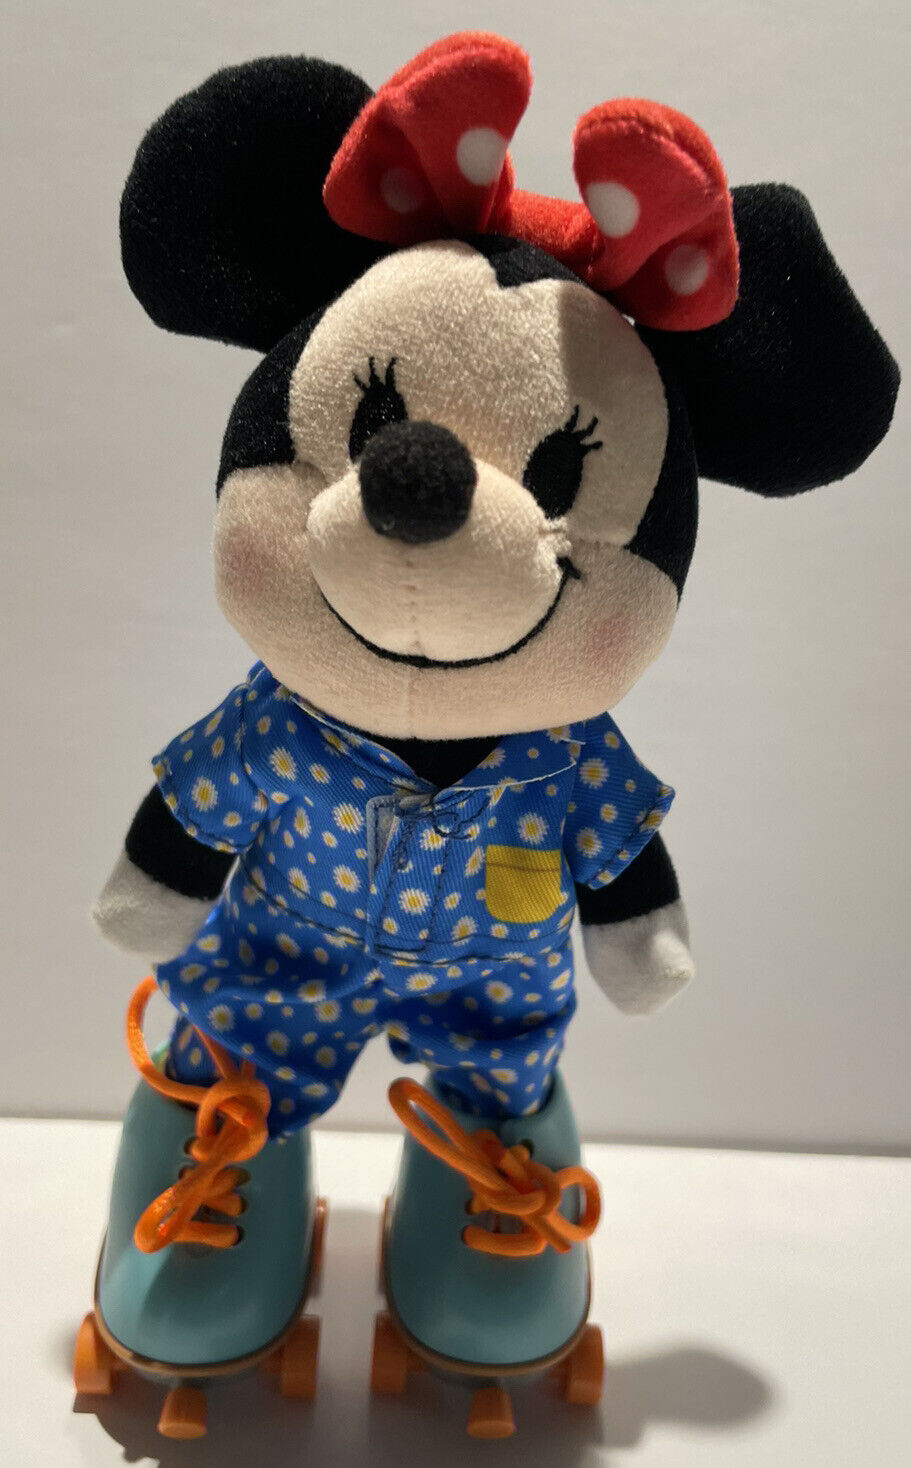 Disney NuiMOs Minnie Mouse Plush Doll W/ Roller Skates